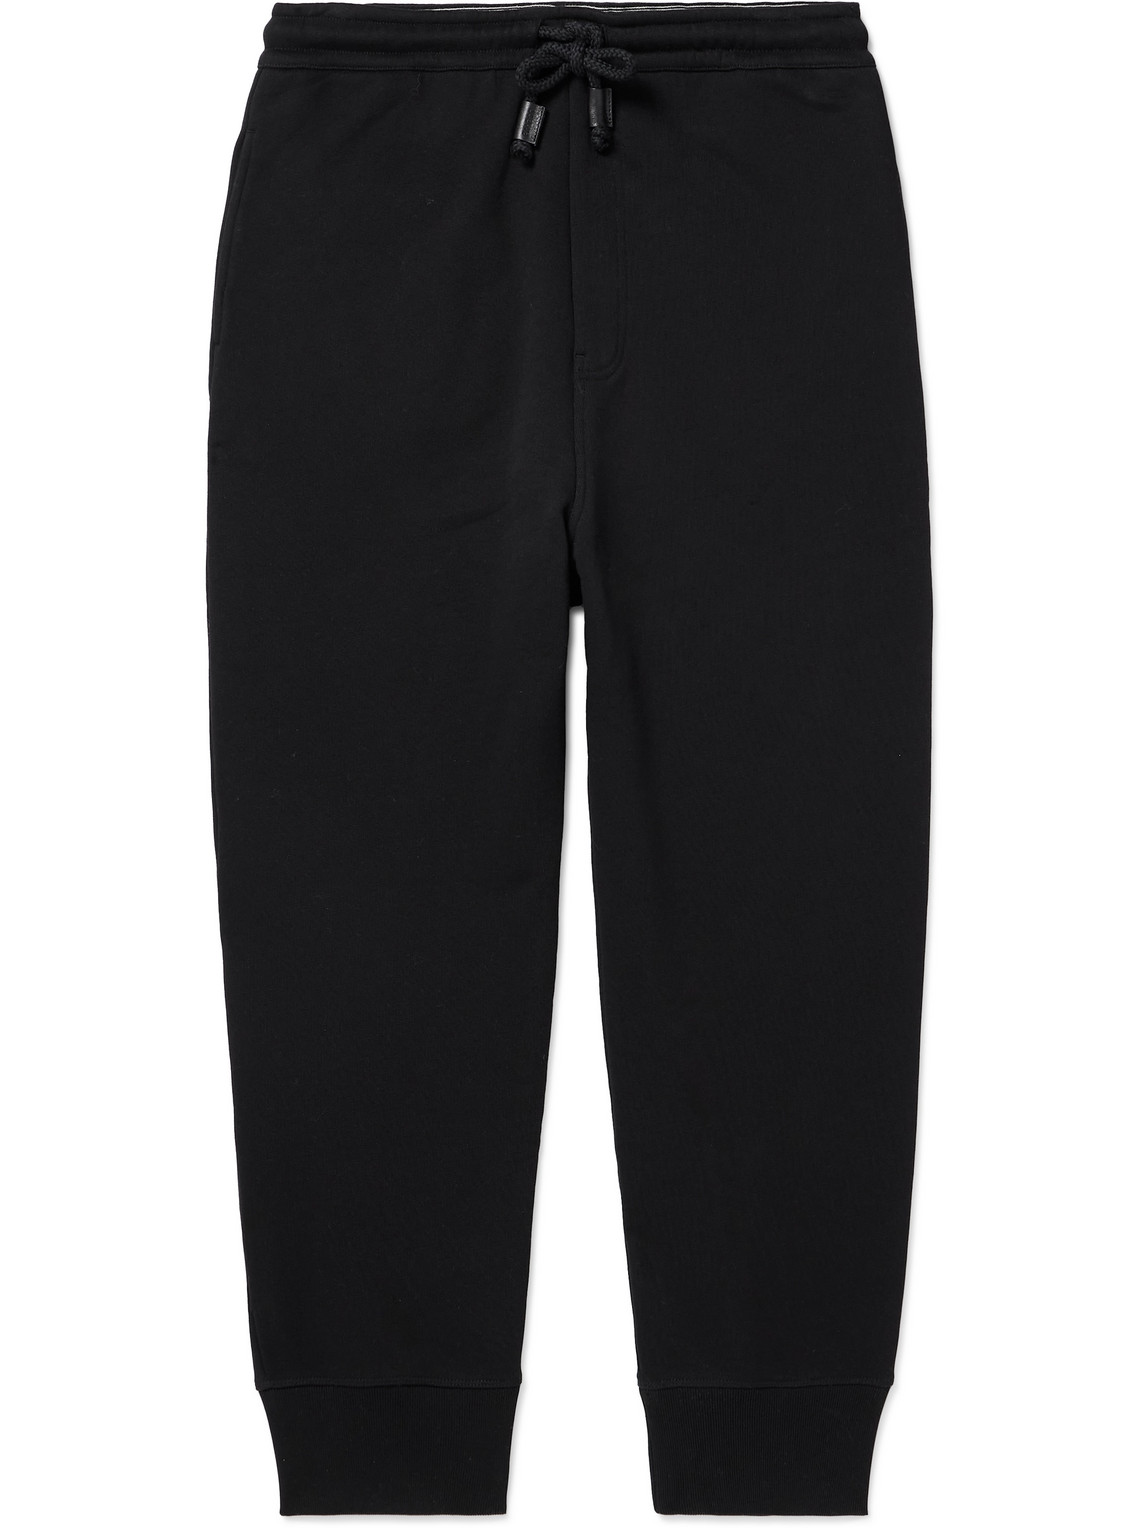 LOEWE - Tapered Cotton-Jersey Sweatpants - Men - Black - XXXL von LOEWE